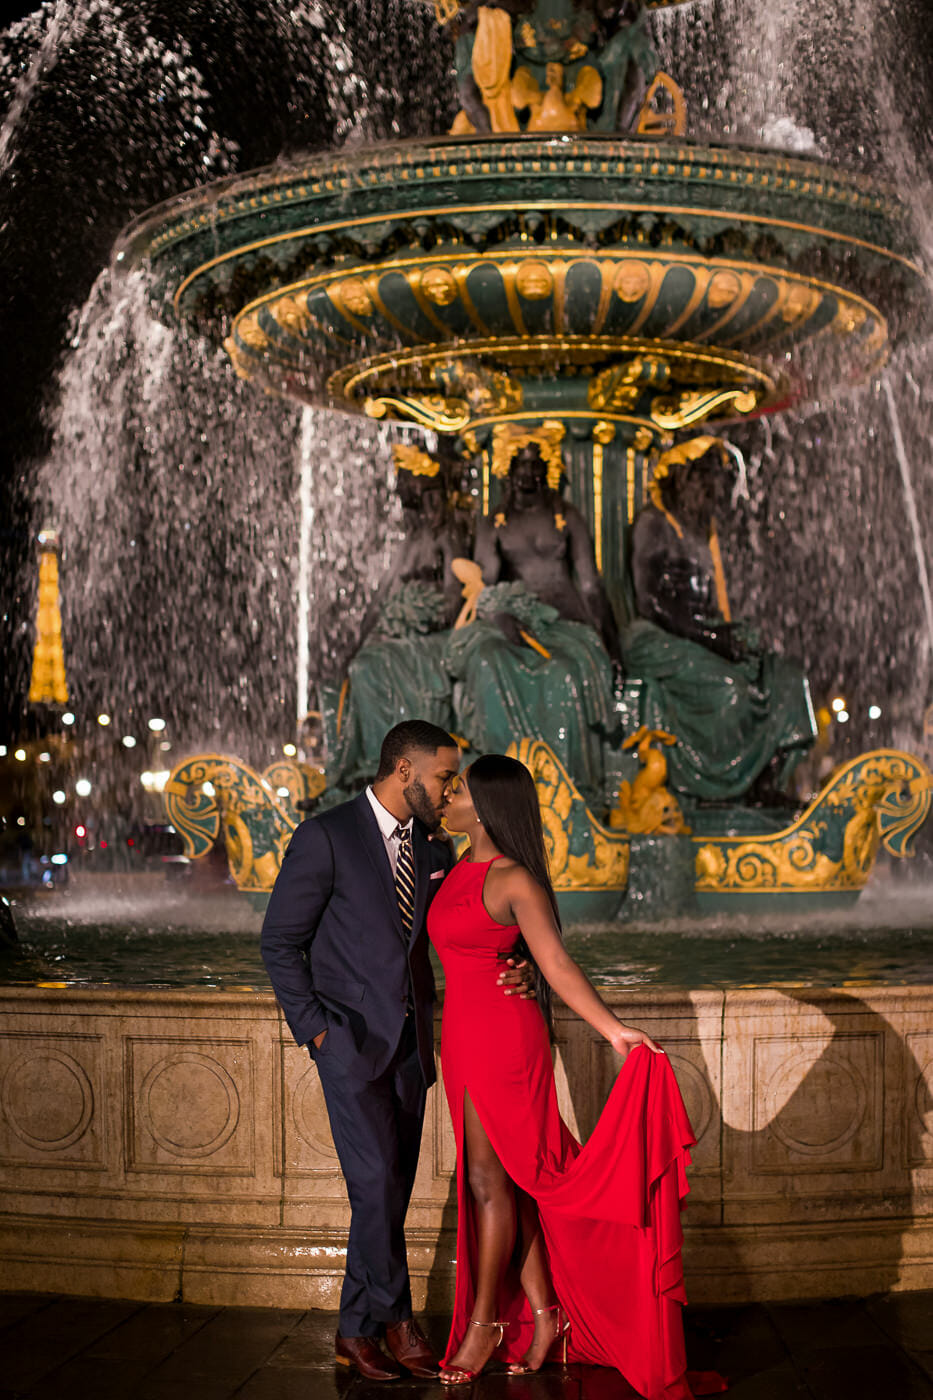 Paris couple photoshoot: nighttime engagement photos